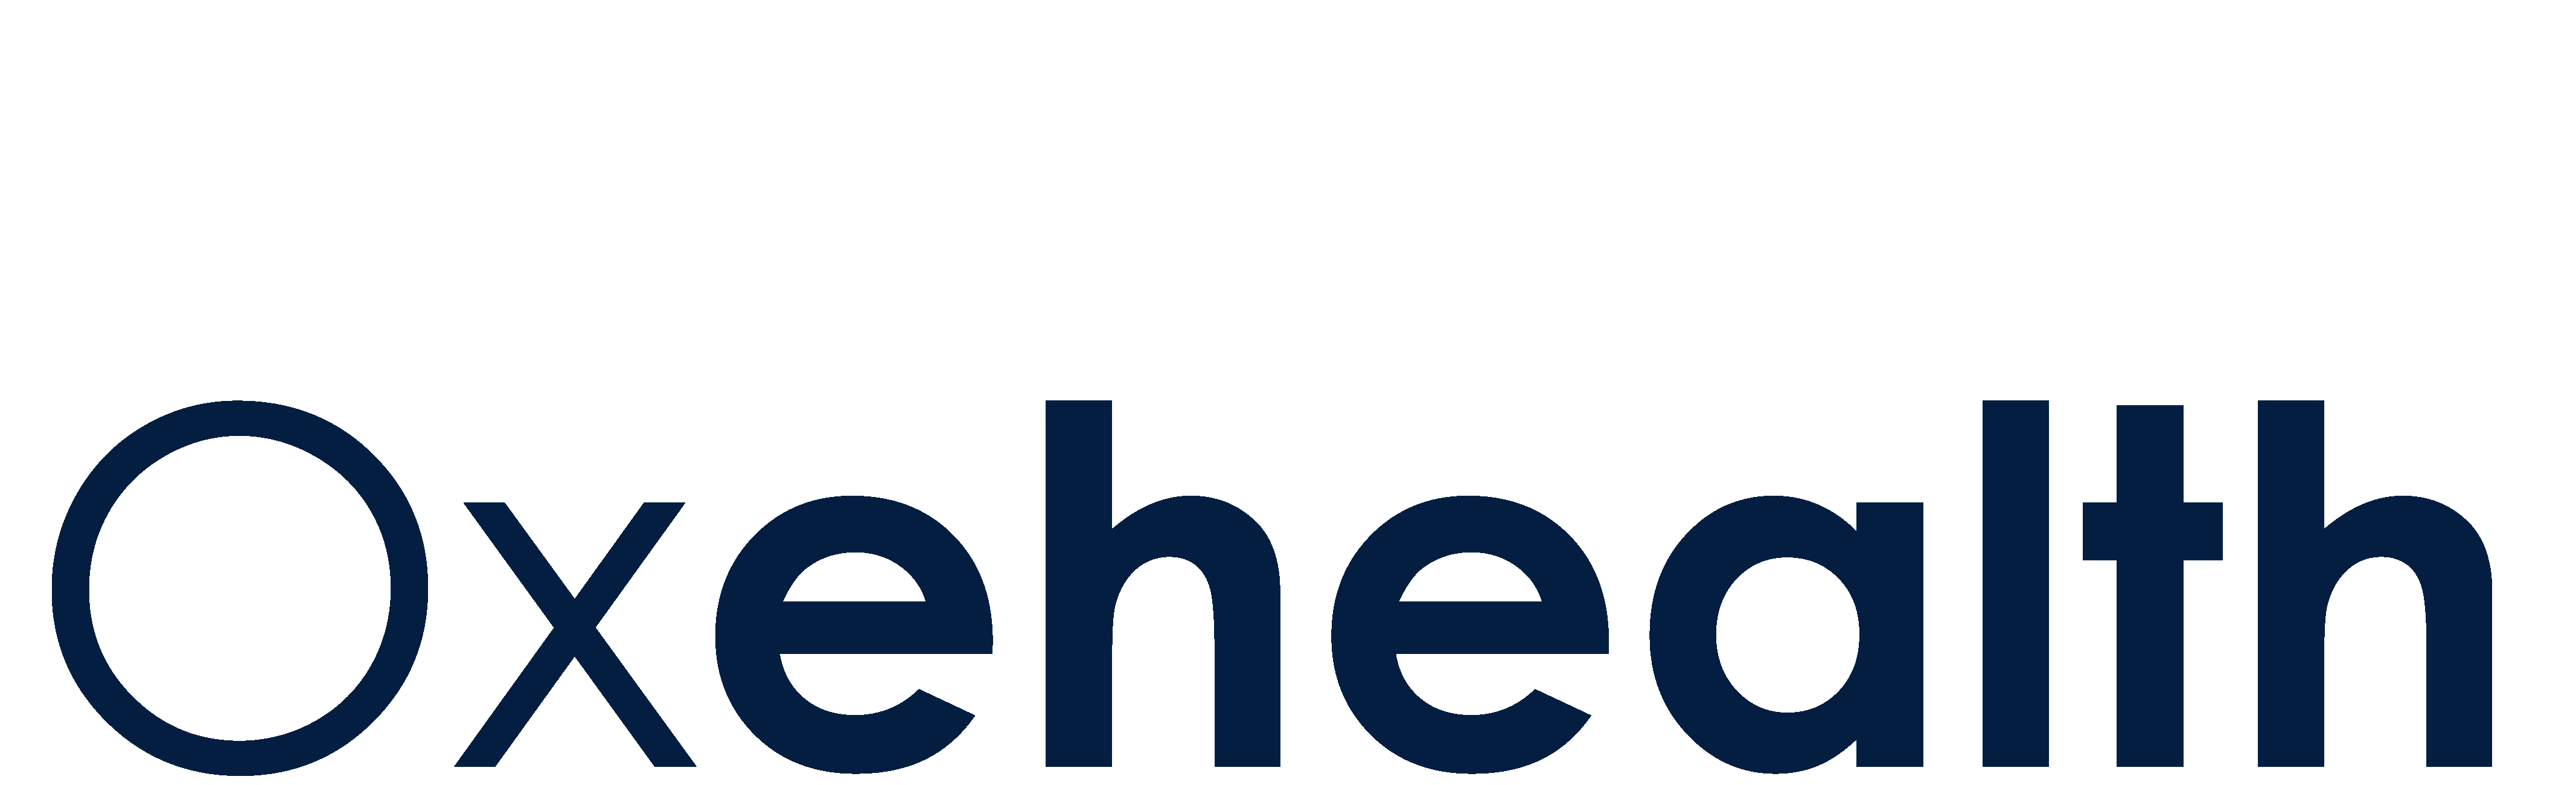 Oxehealth Ltd.